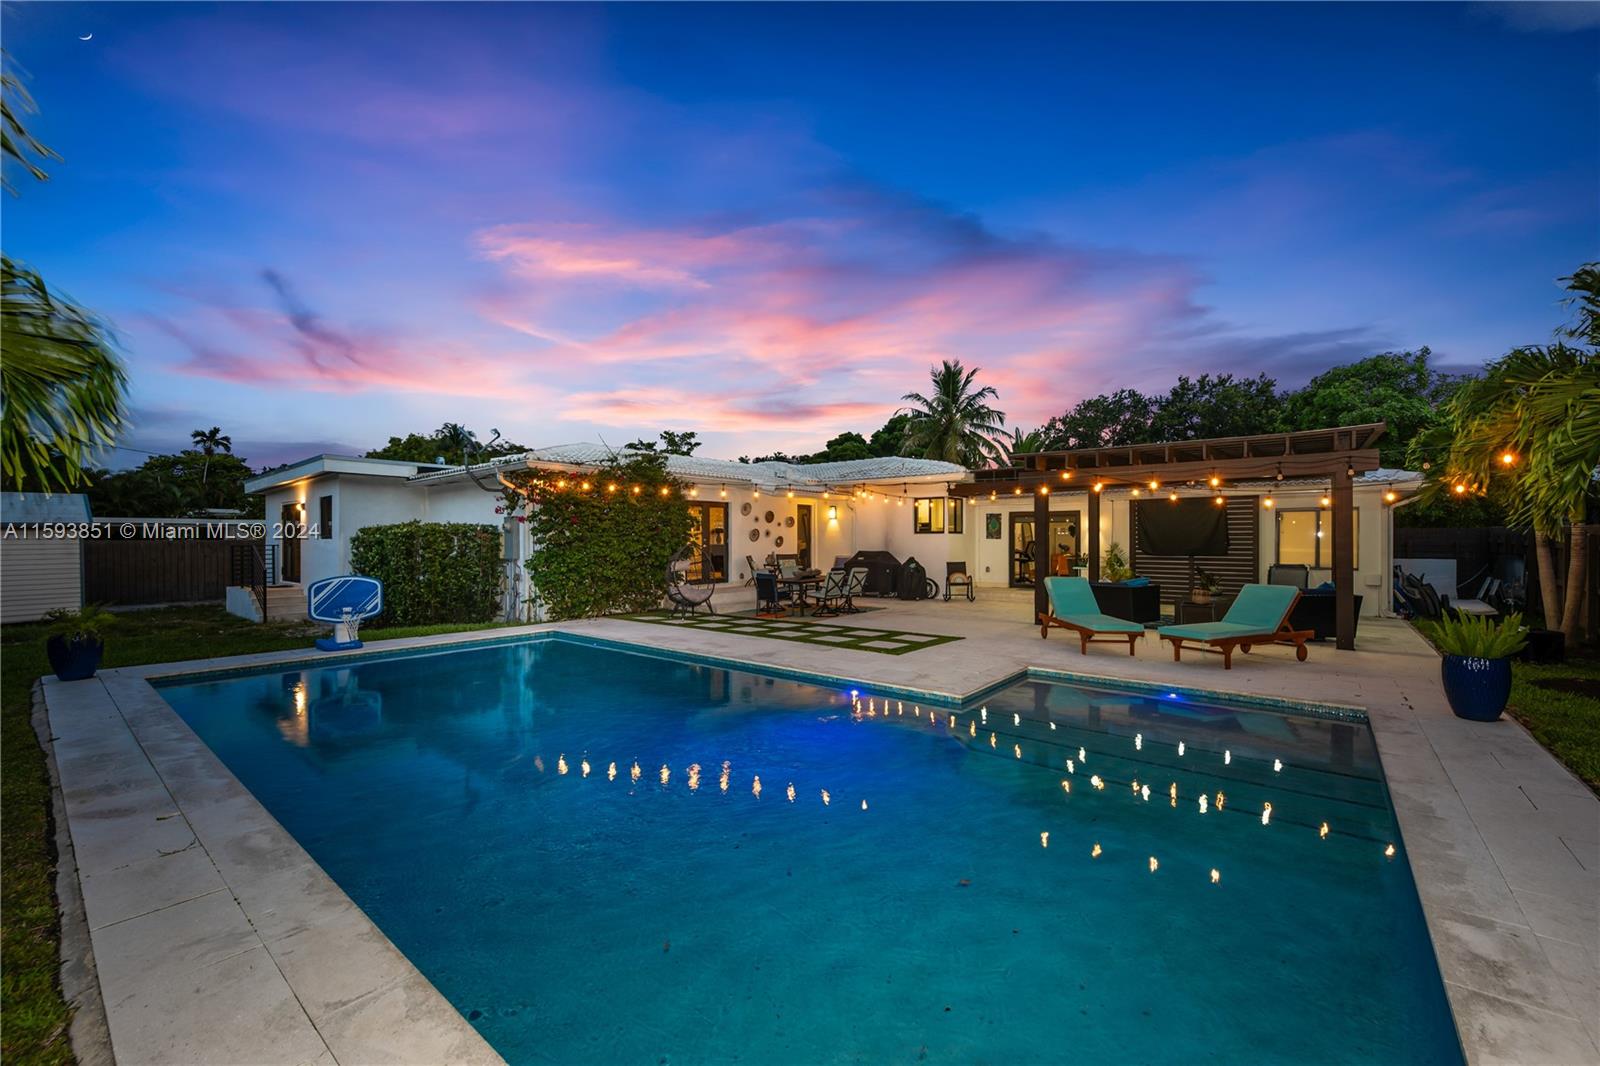 Property for Sale at 27 Ne 94th St, Miami Shores, Miami-Dade County, Florida - Bedrooms: 4 
Bathrooms: 4  - $2,250,000